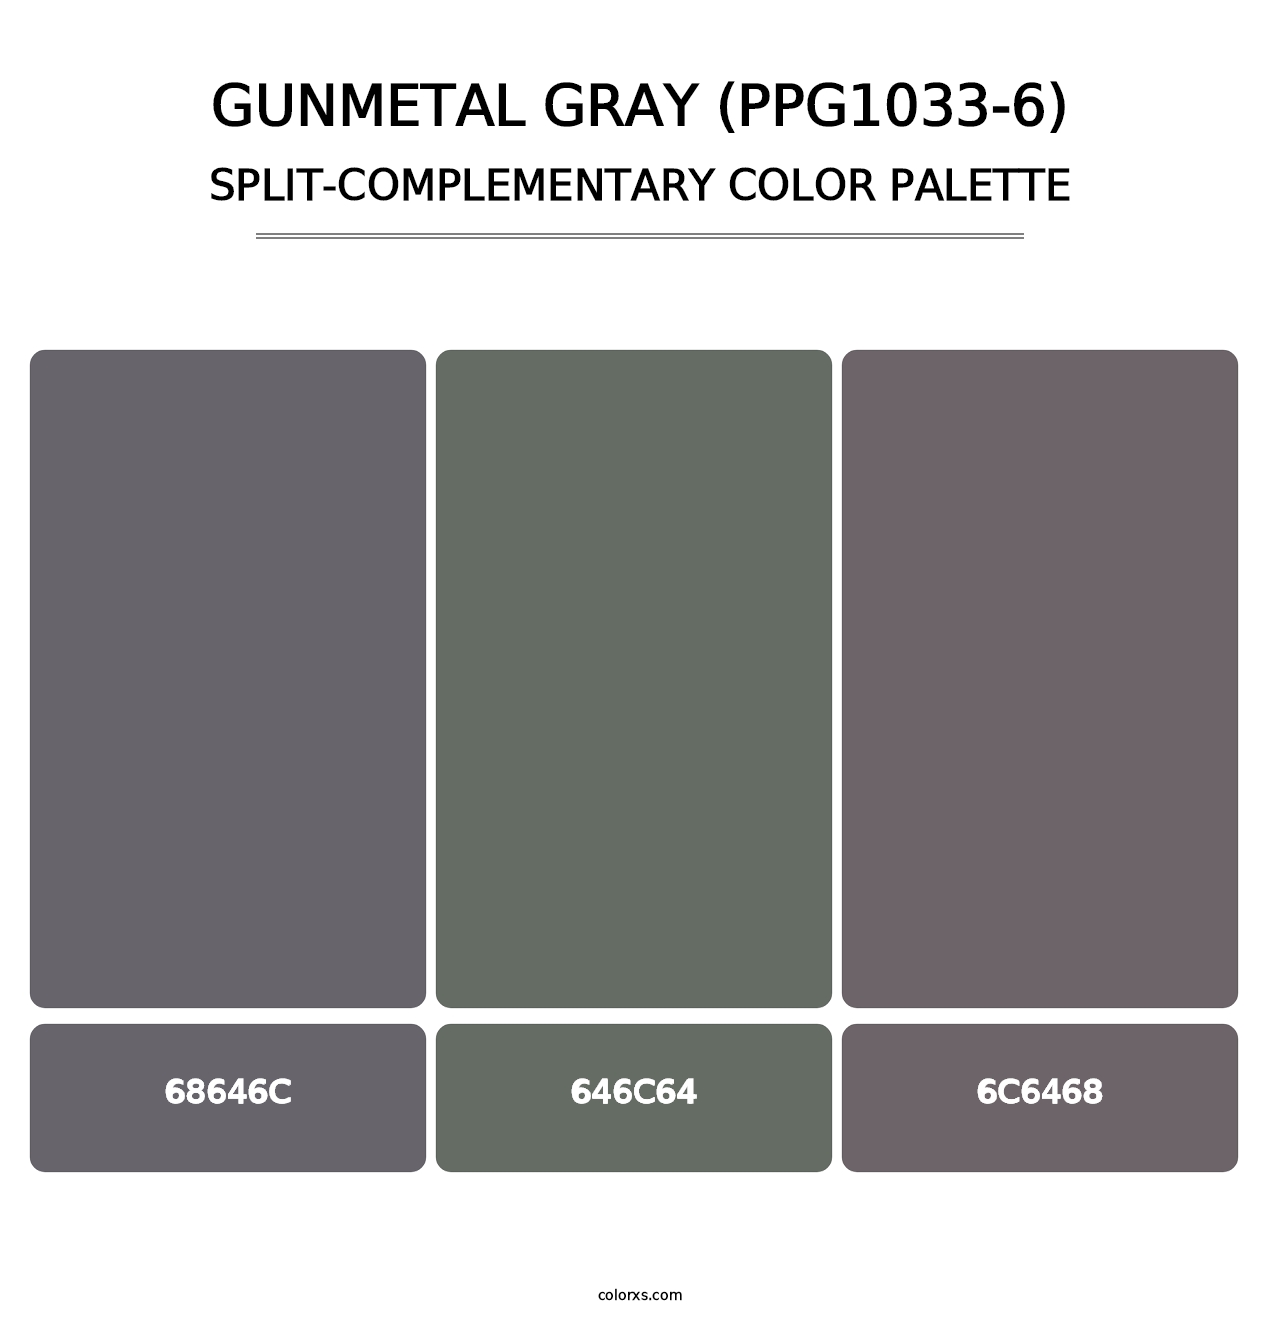 Gunmetal Gray (PPG1033-6) - Split-Complementary Color Palette